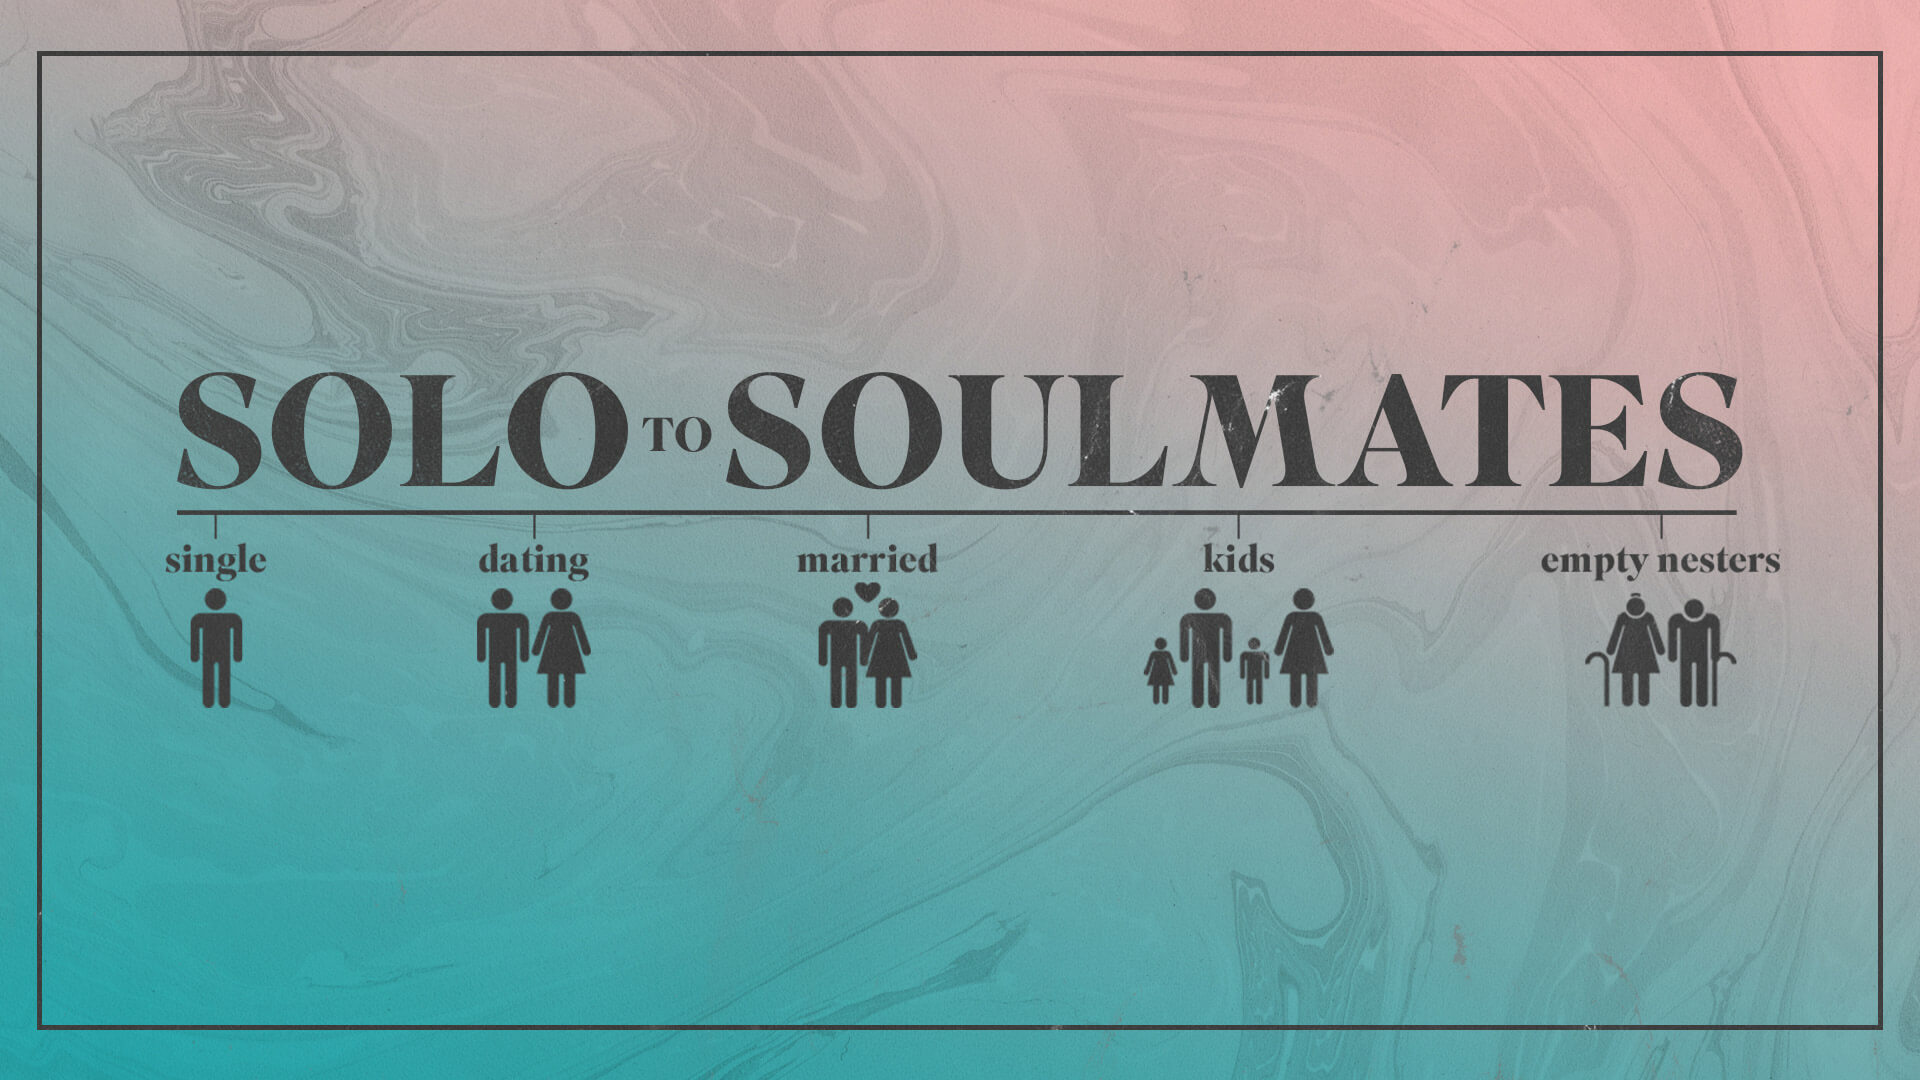 Solo to Soulmates